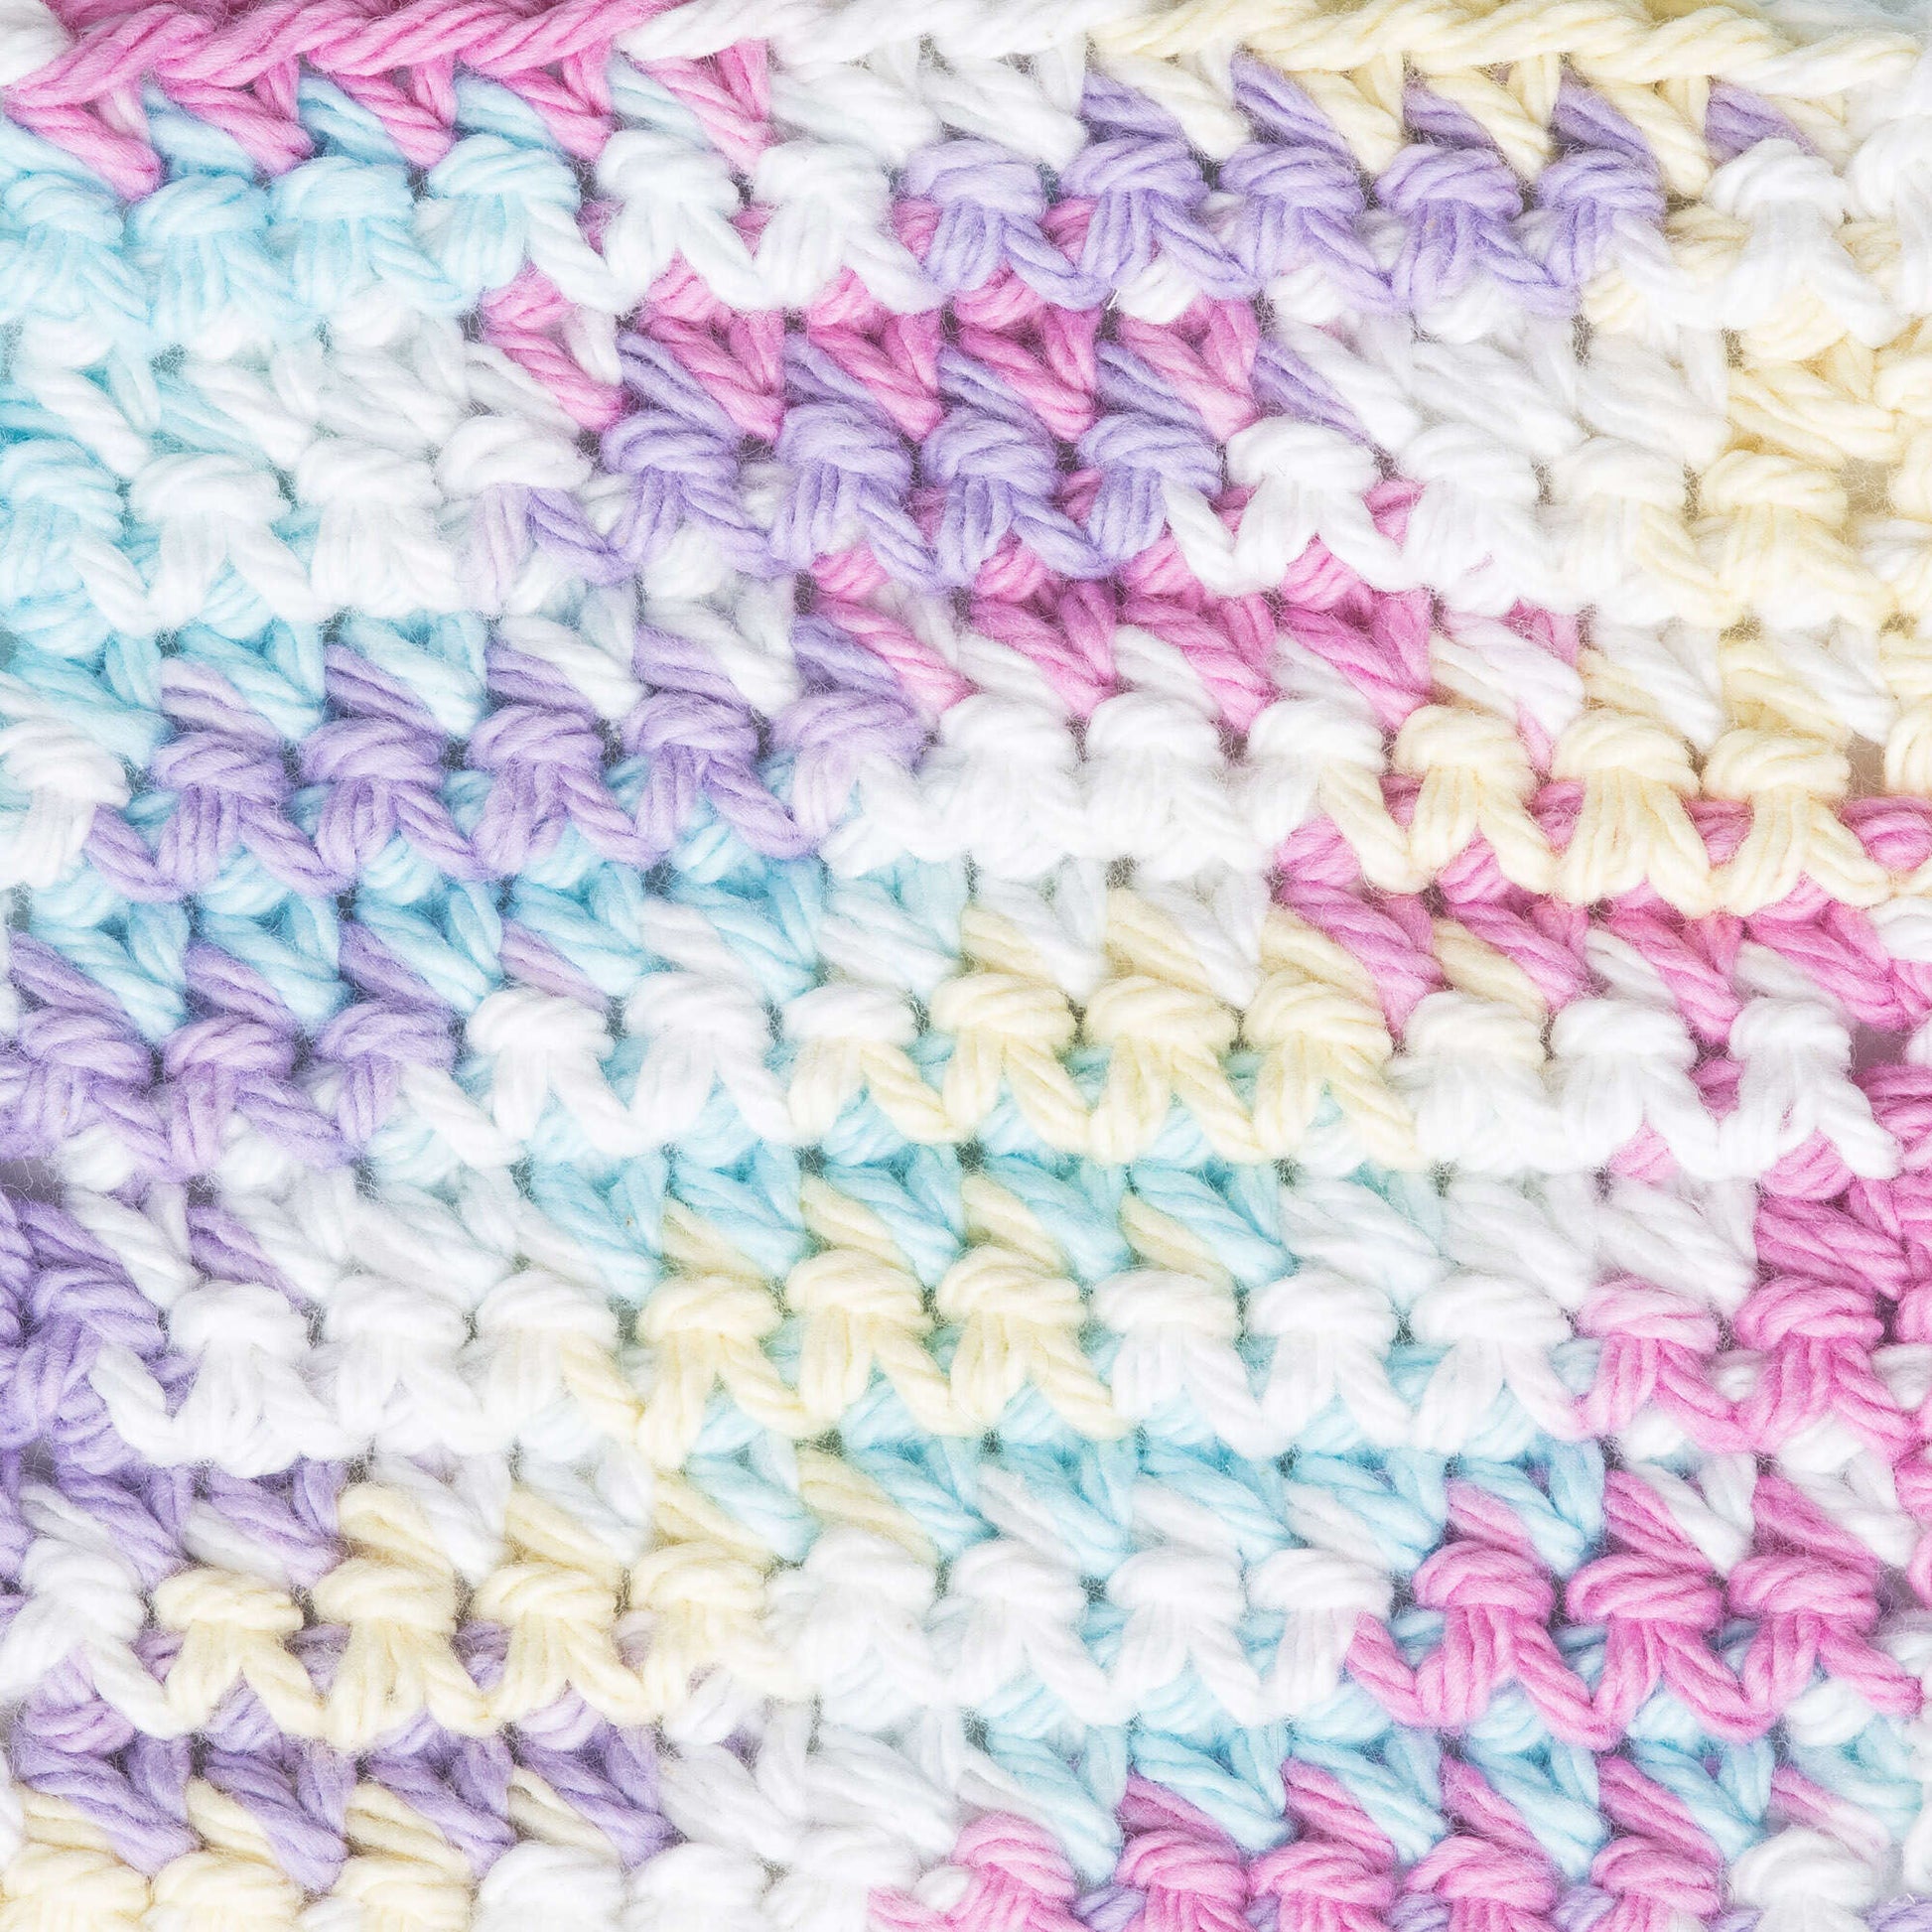 Bernat Handicrafter Cotton Scents Yarn - Clearance Shades